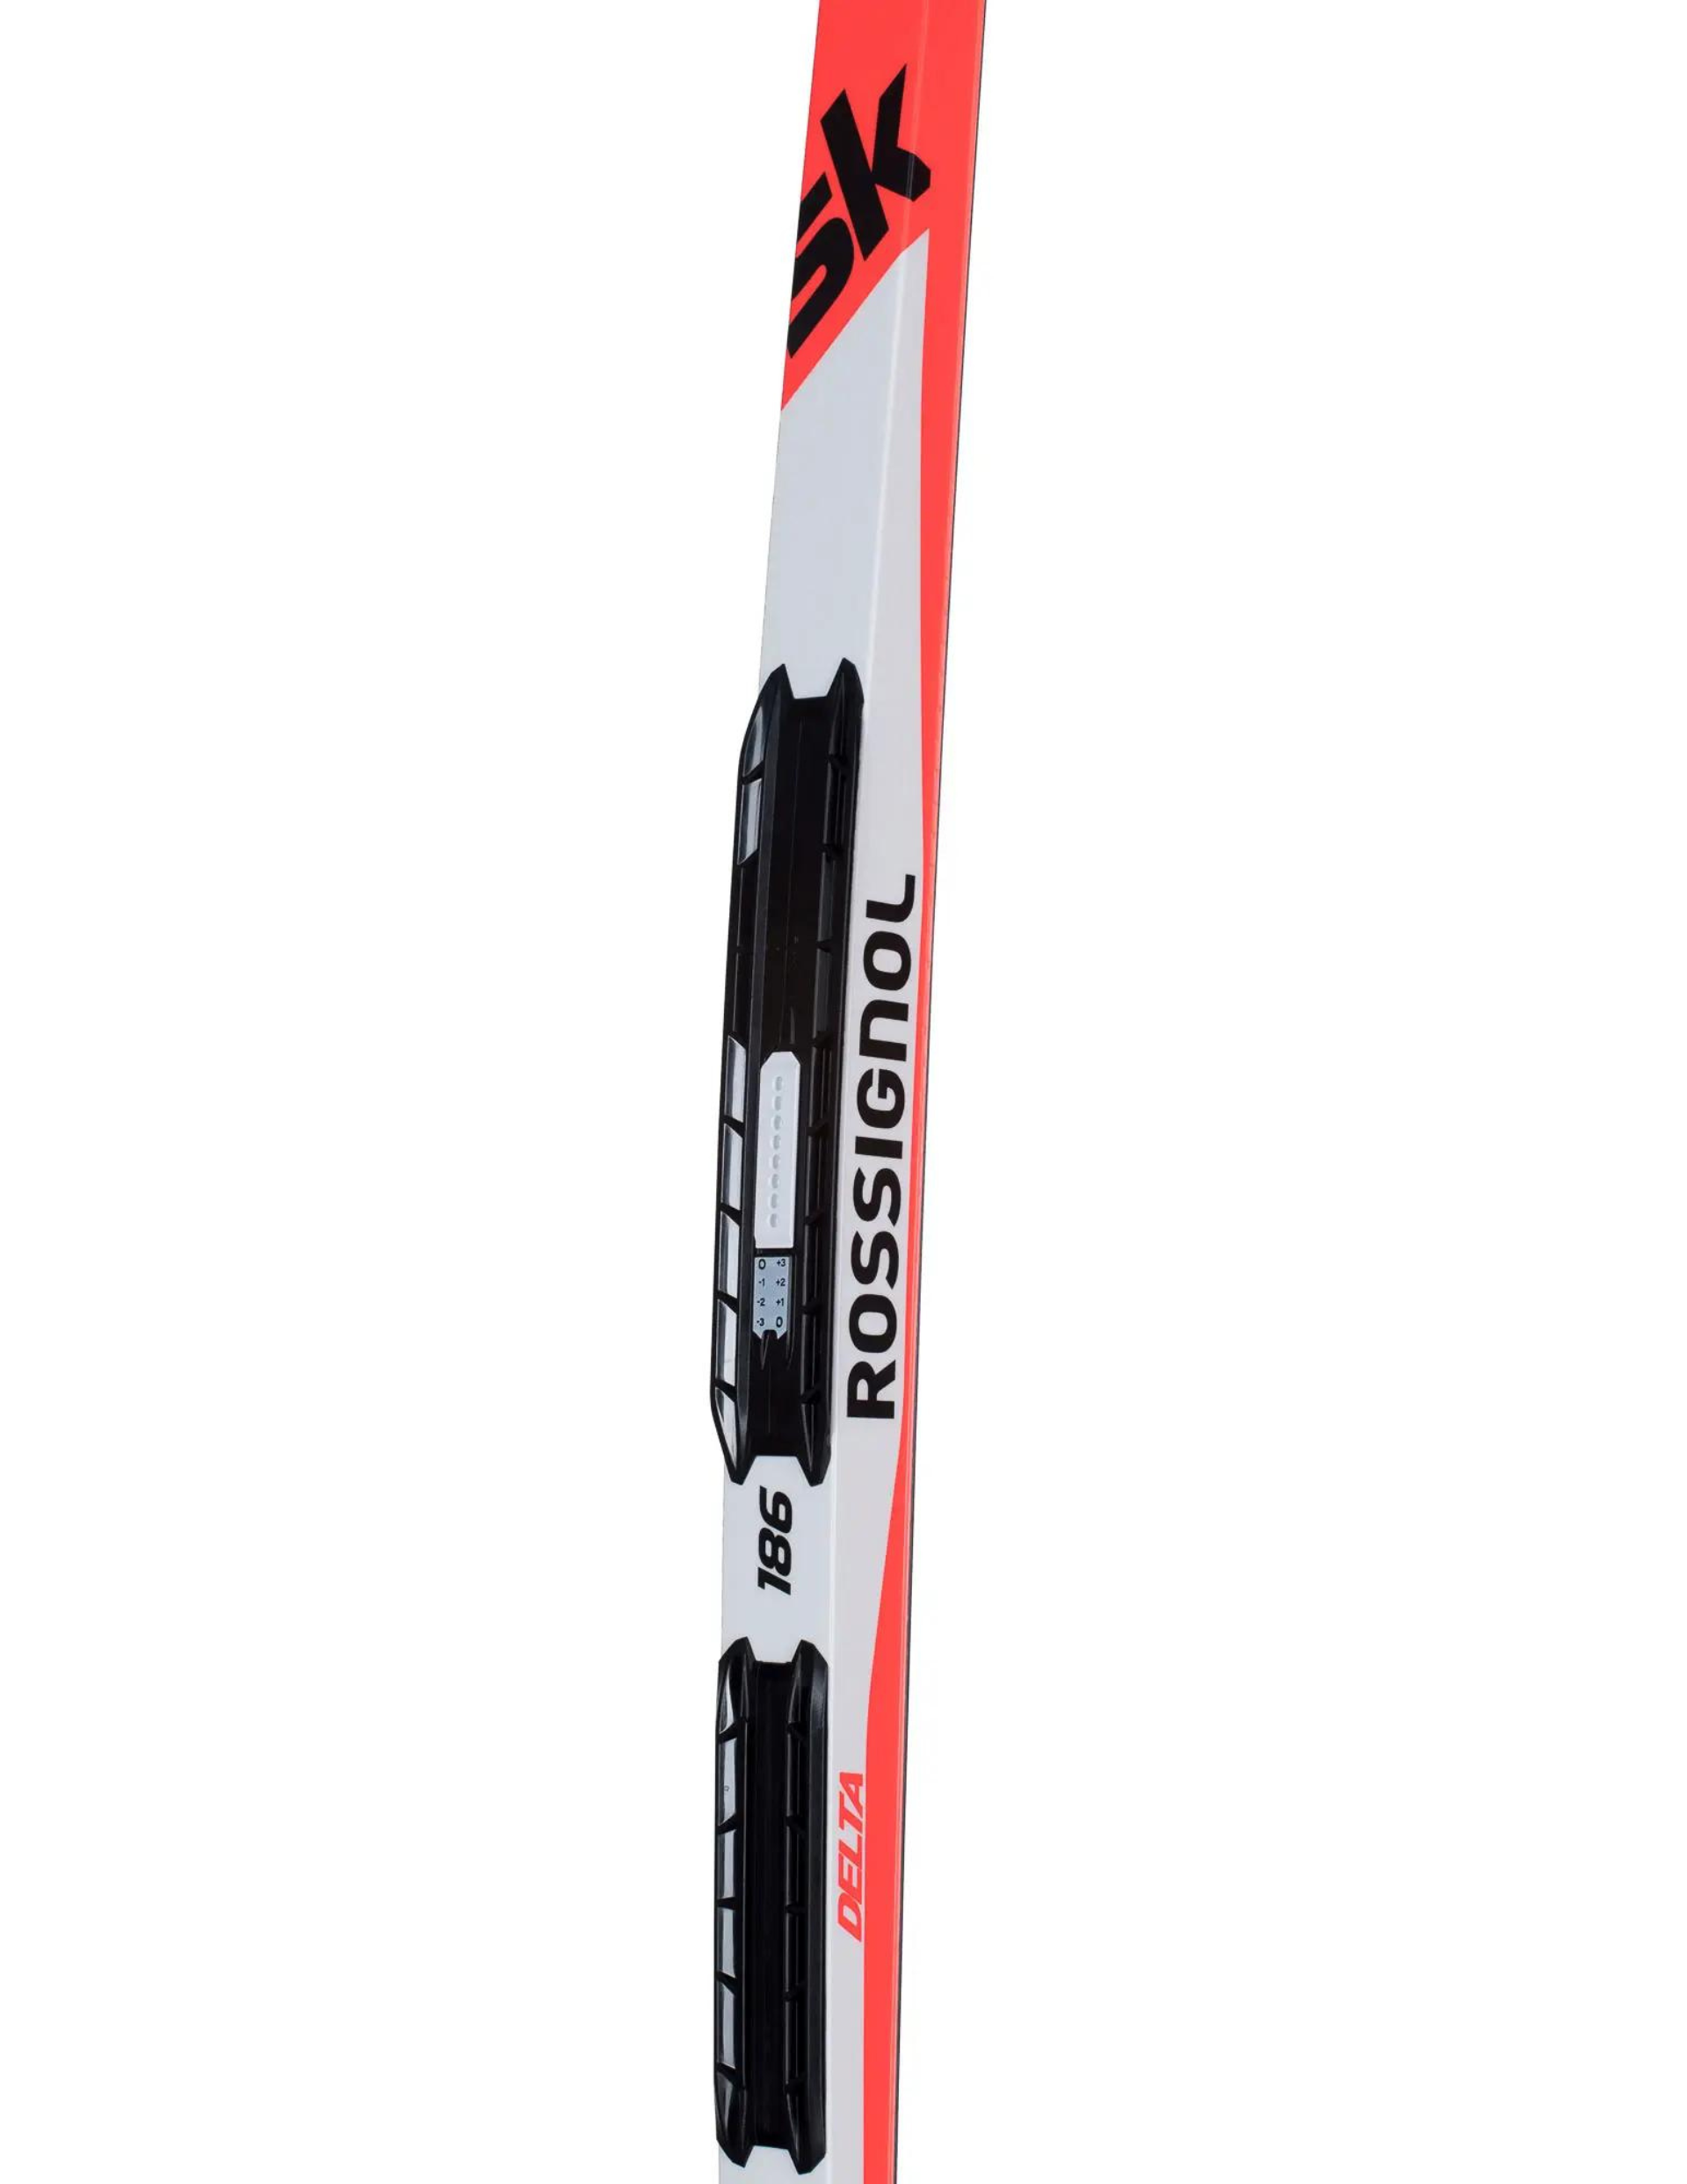 Skis de fond ROSSIGNOL Delta Sport Skating : compatibles avec le système de fixation Turnamic